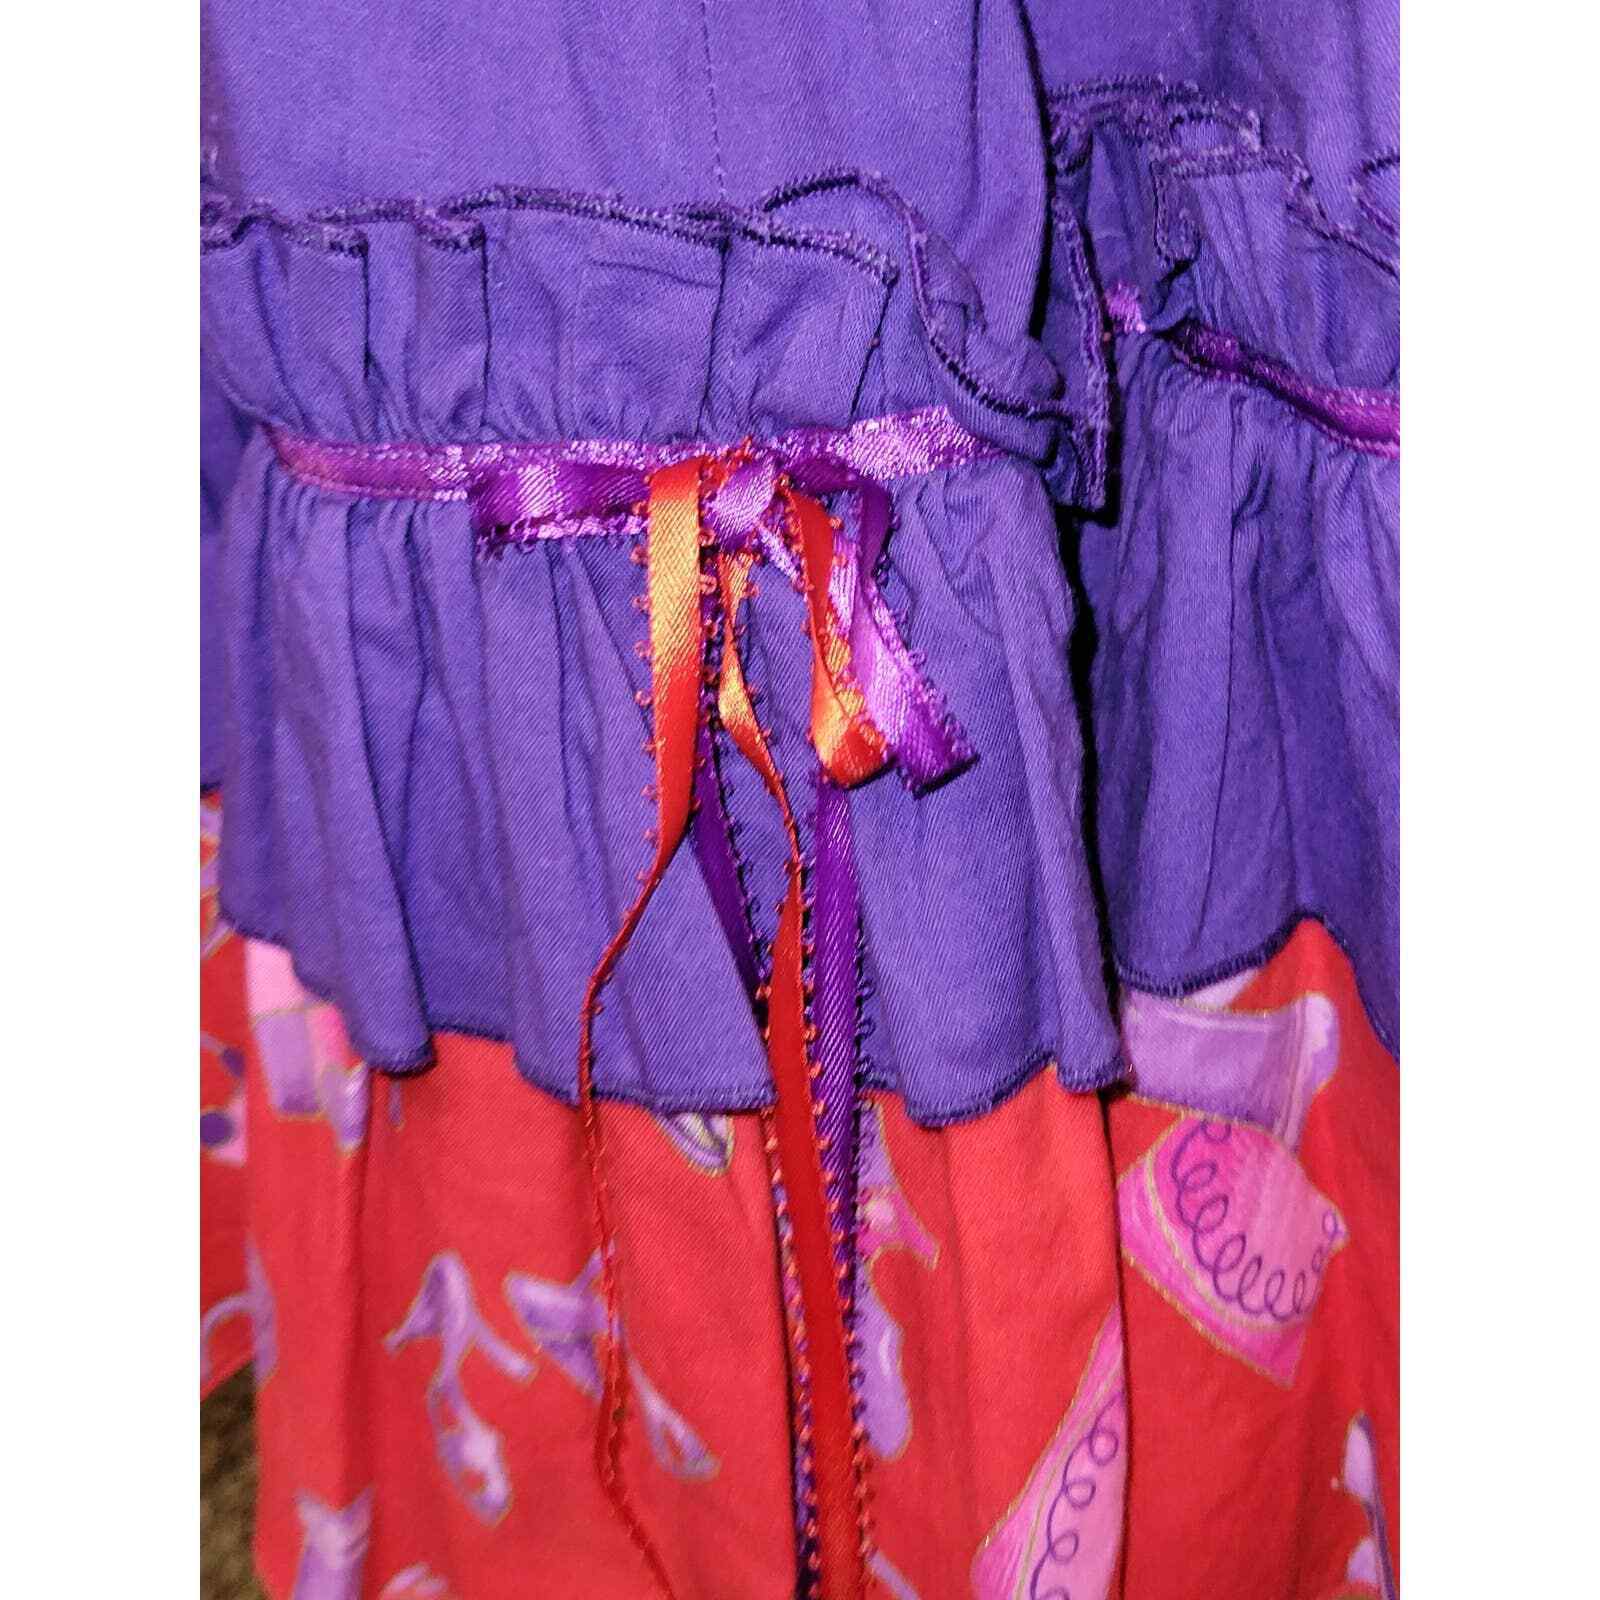 Handmade Vintage SQUARE DANCE Western SWING Dress… - image 3